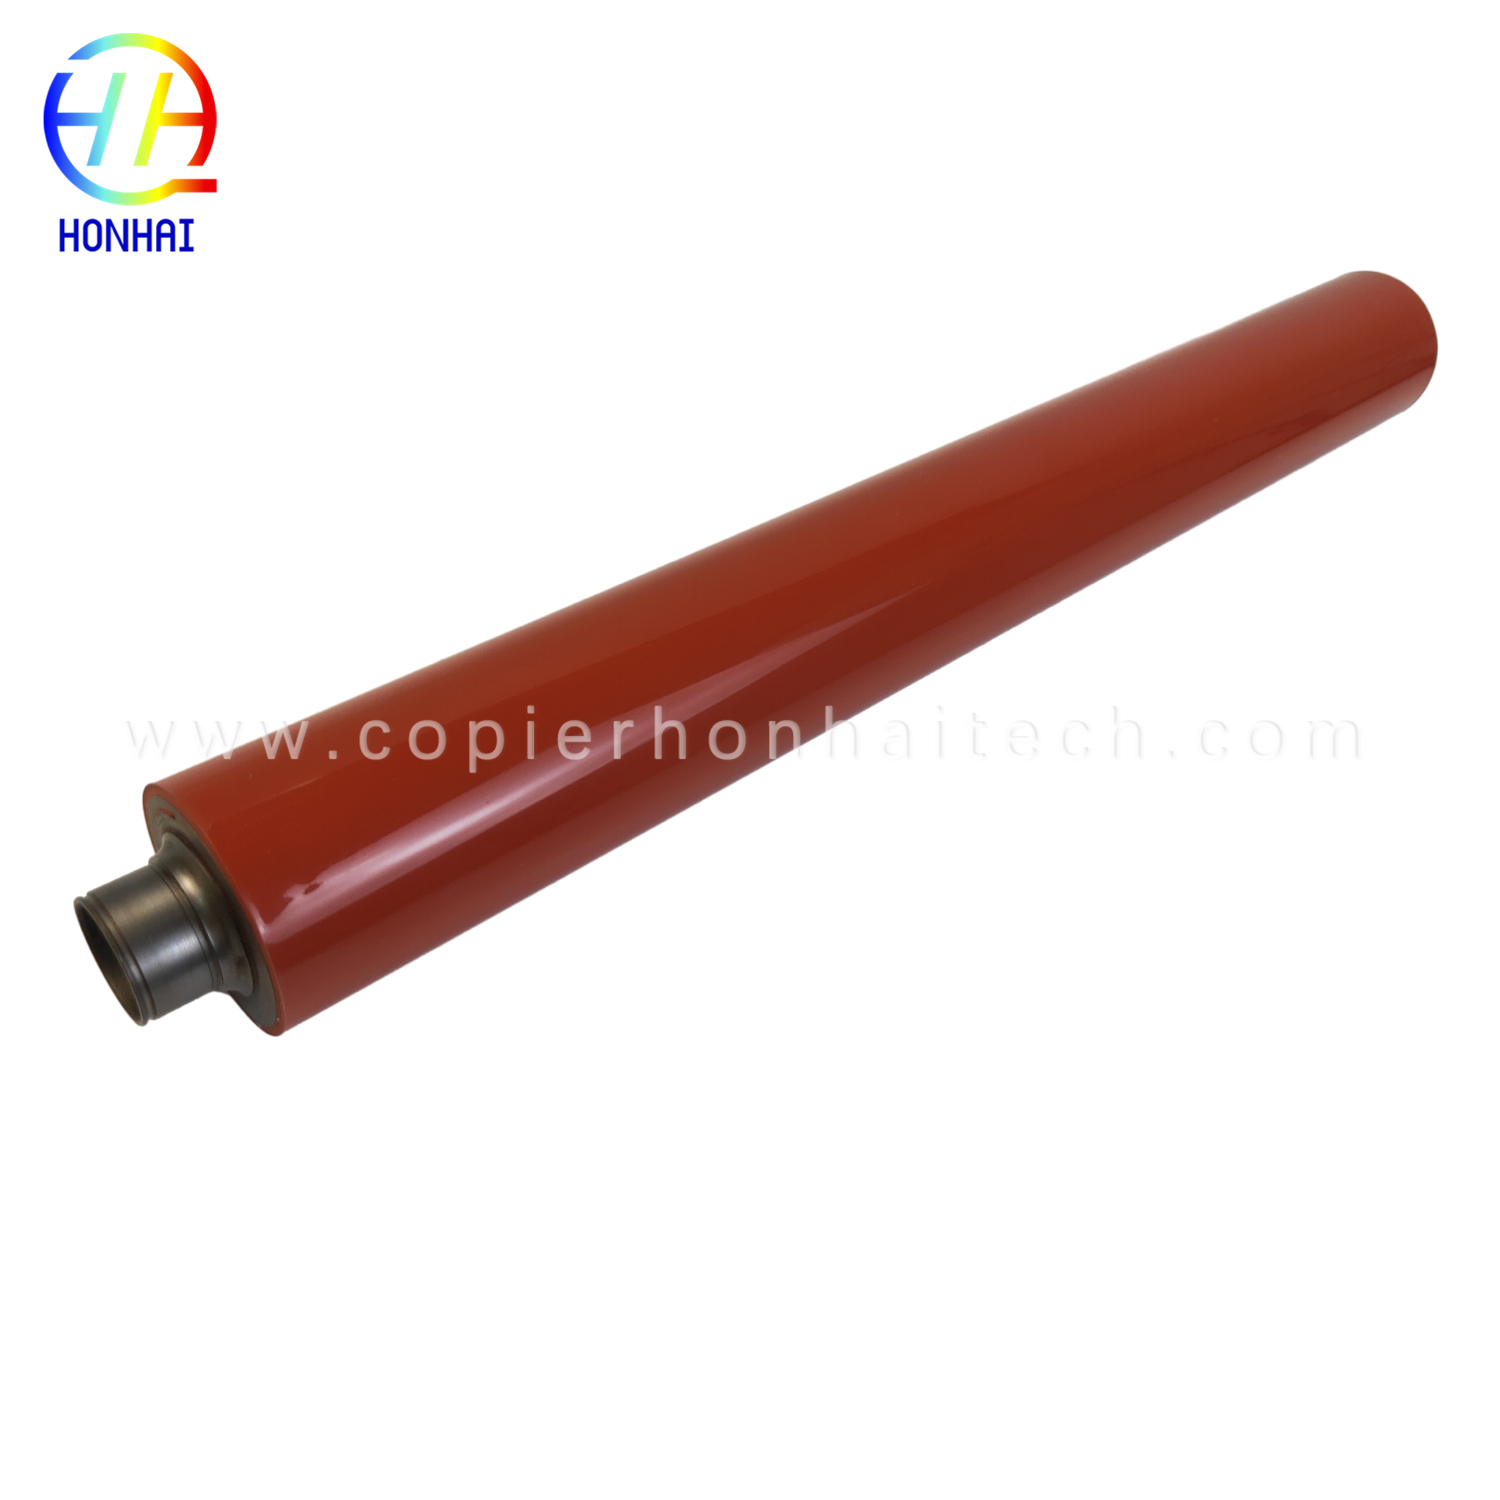 https://www.copierhonhaitech.com/oem-upper-fuser-heat-roller-for-sharp-nrolm1748fczz-mx-2600n-3100n-product/